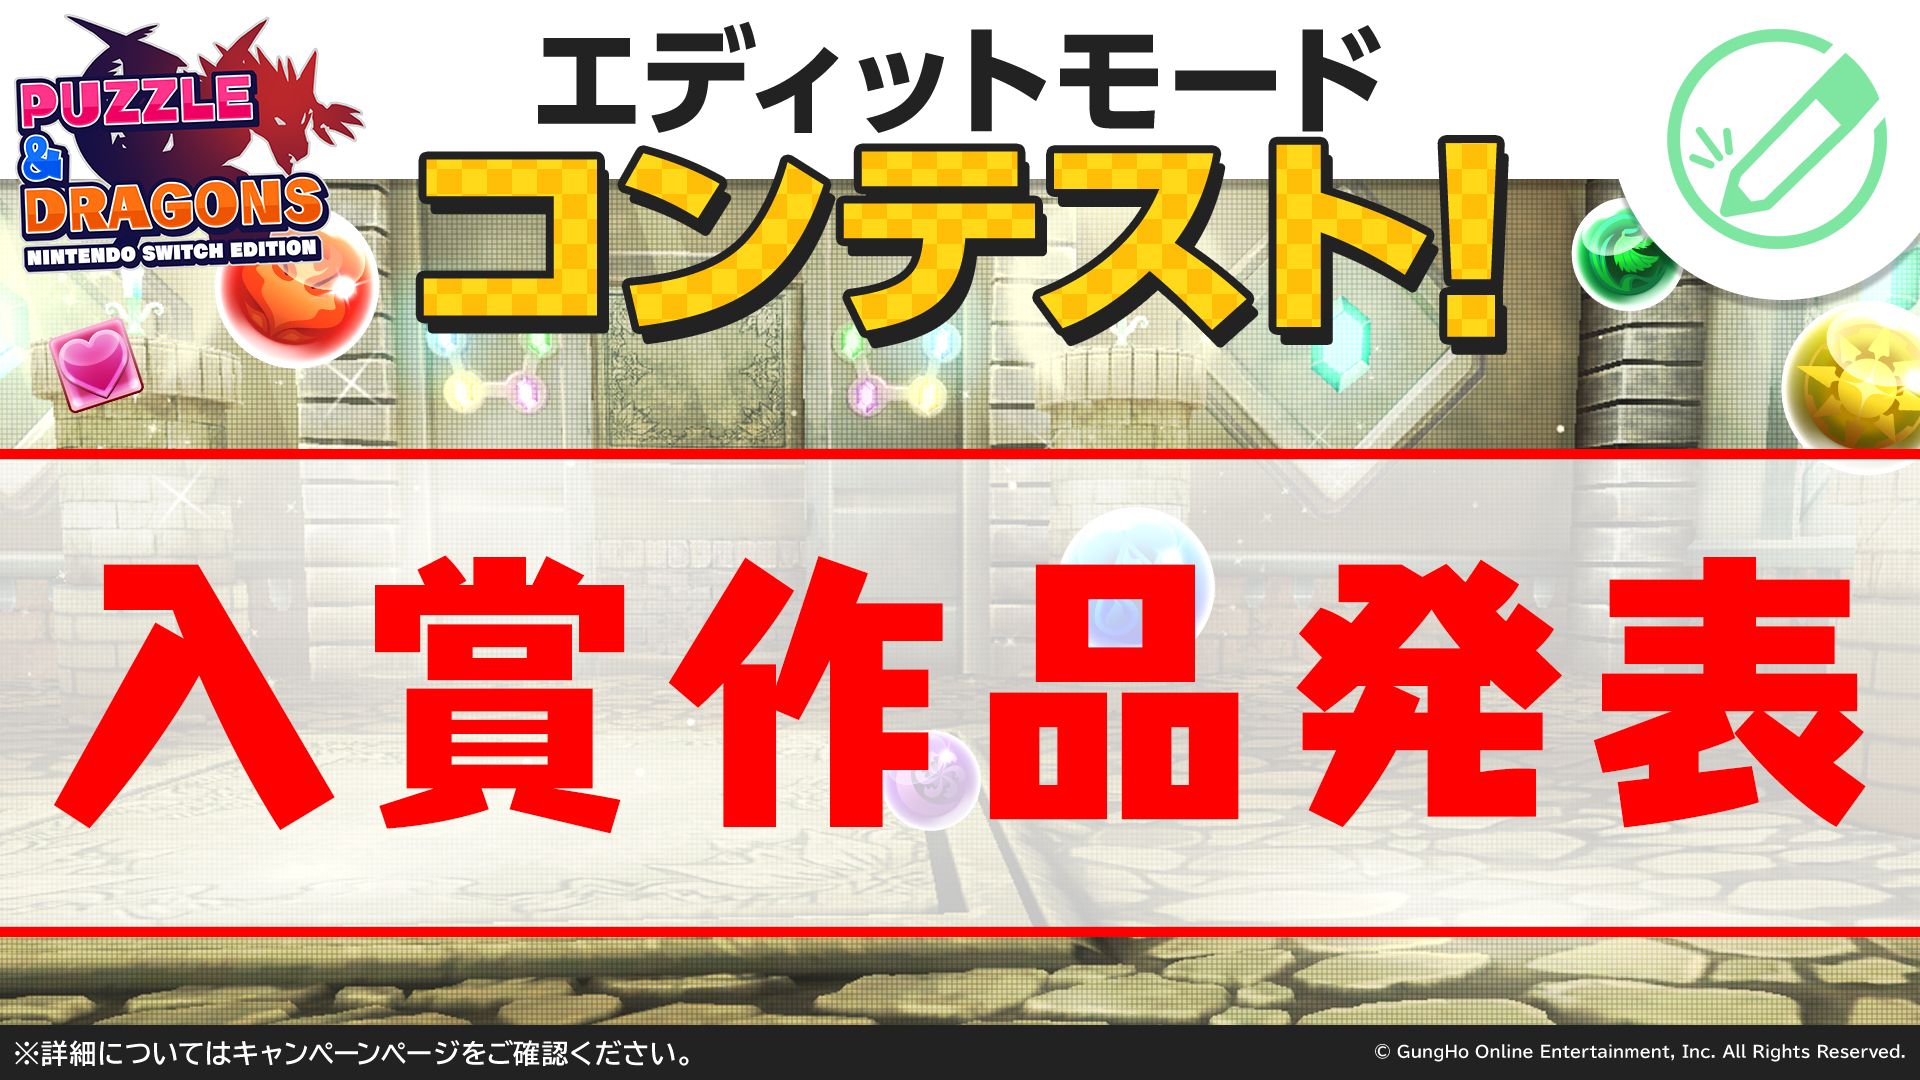 PUZZLE & DRAGONS Nintendo Switch Editionコンテスト入賞作品発表